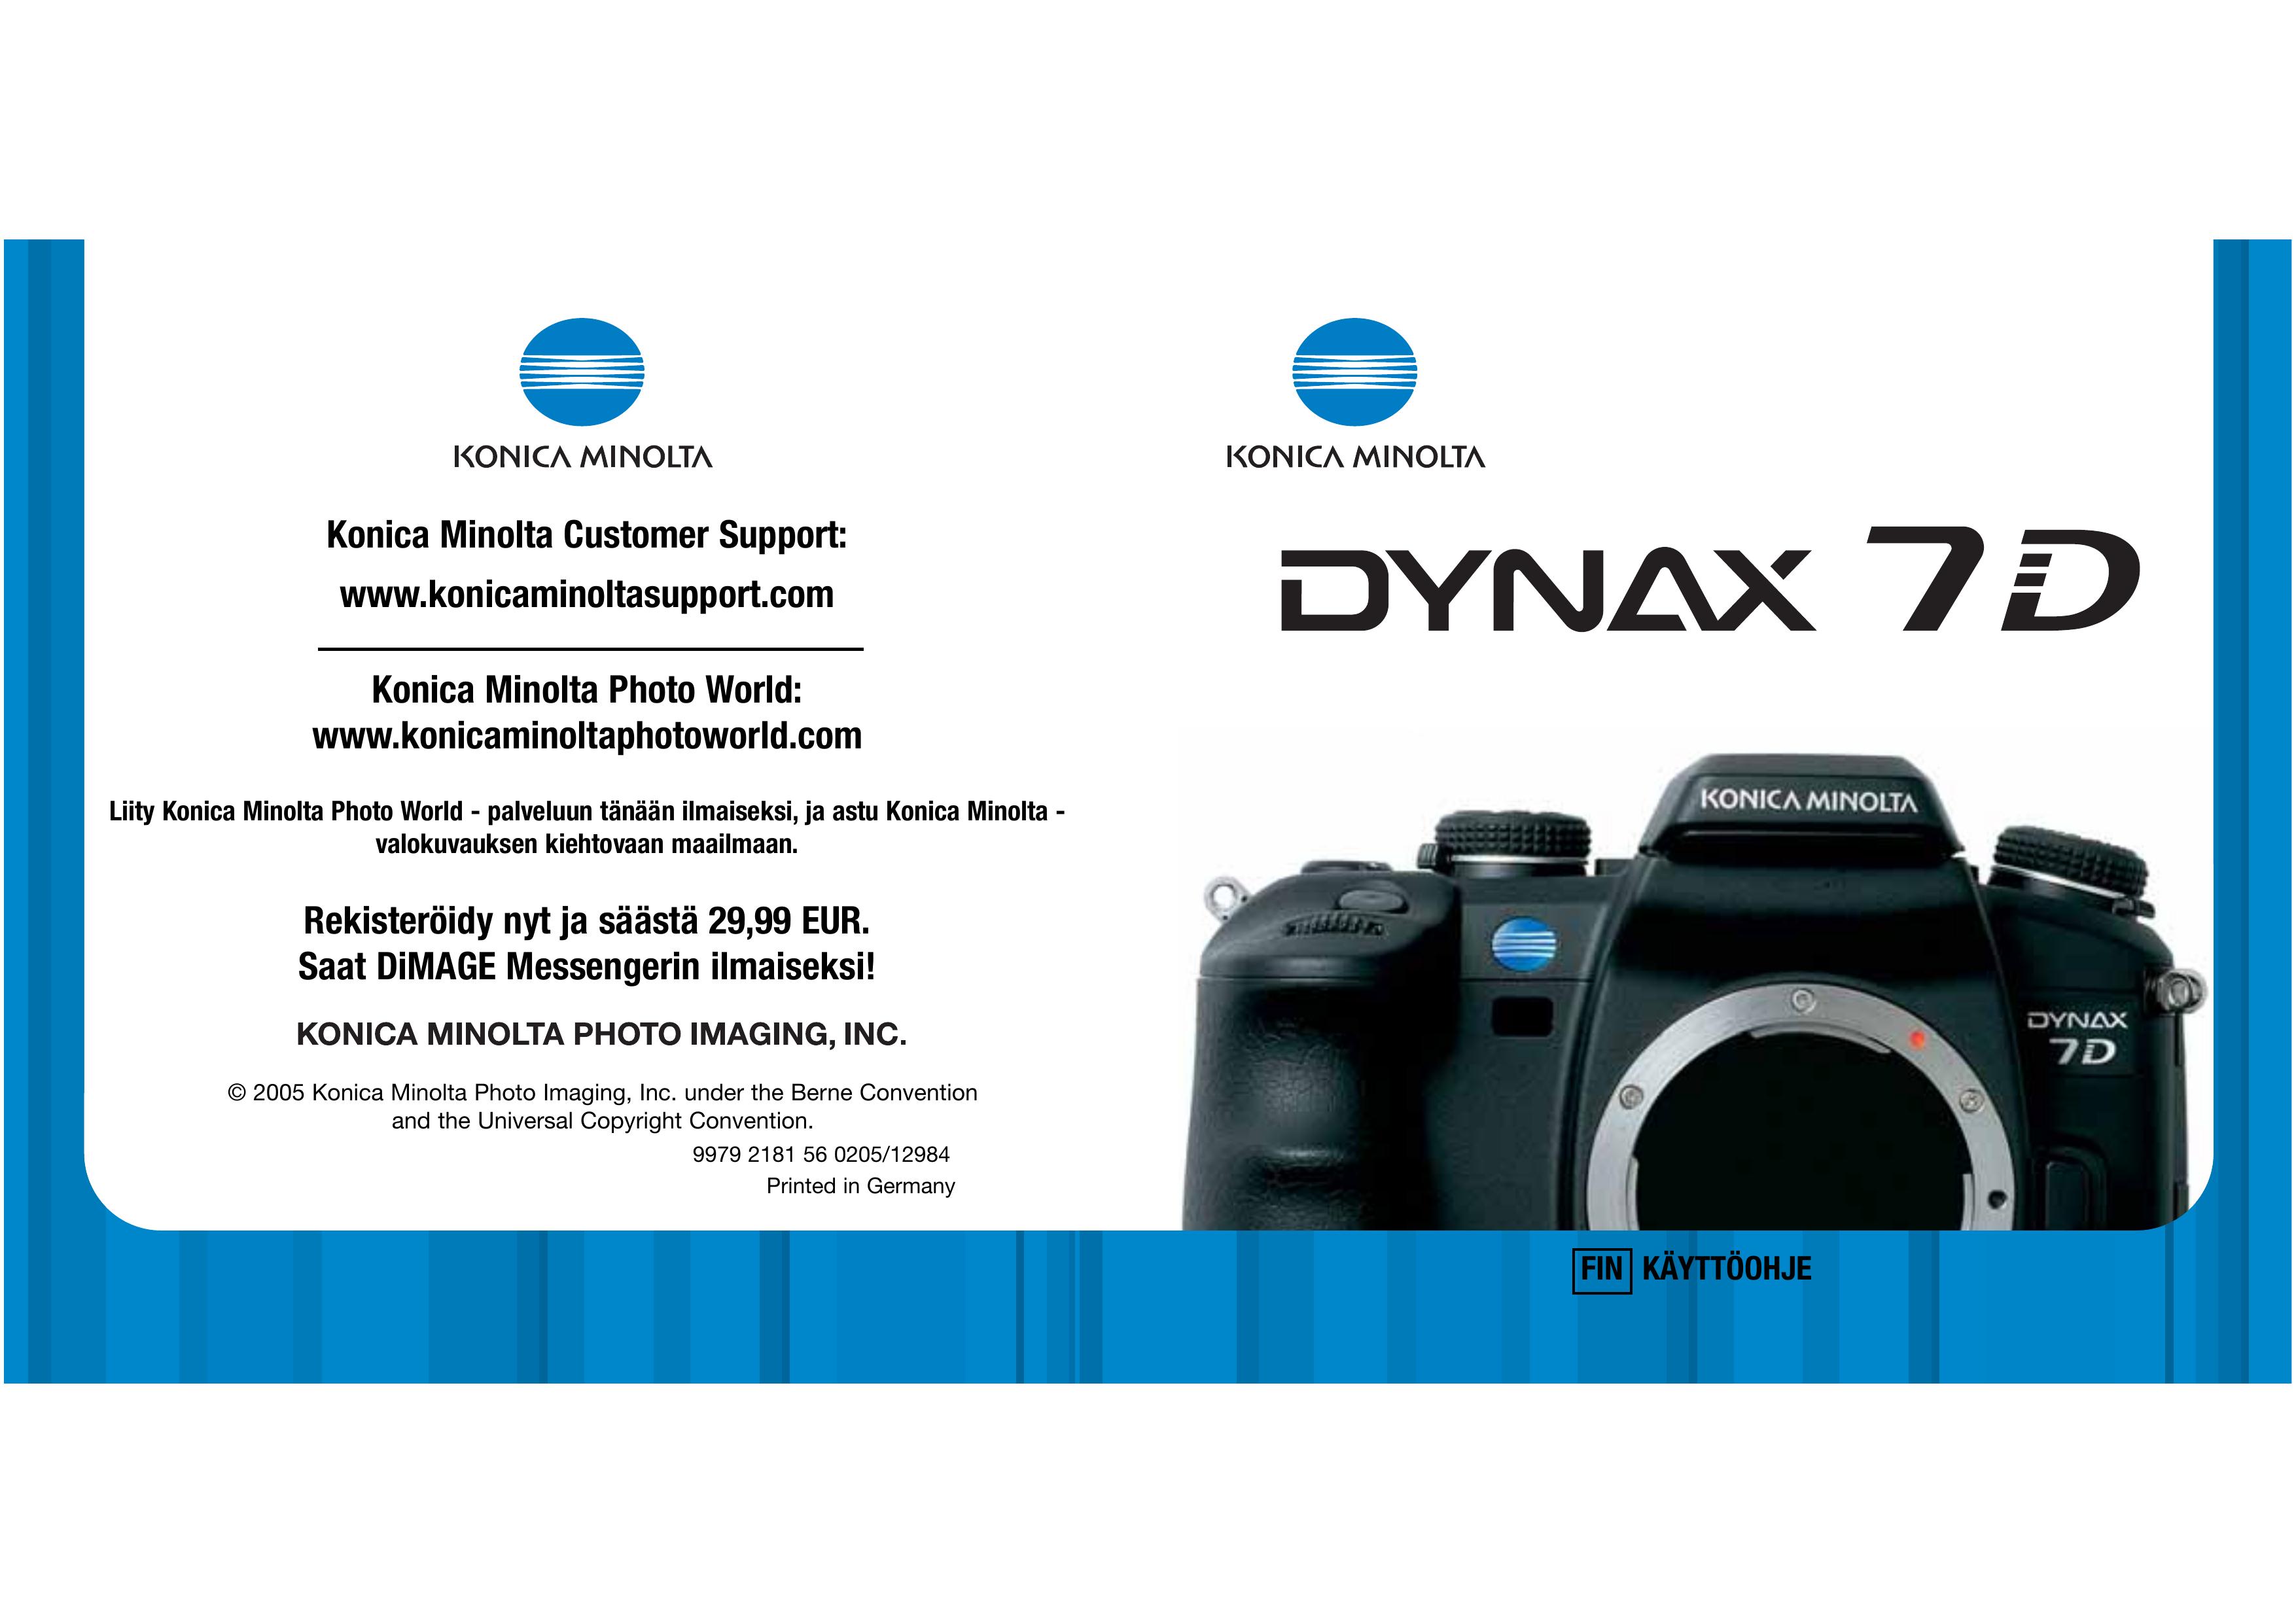 Konica Minolta Dinax 7D Digital Camera User Manual